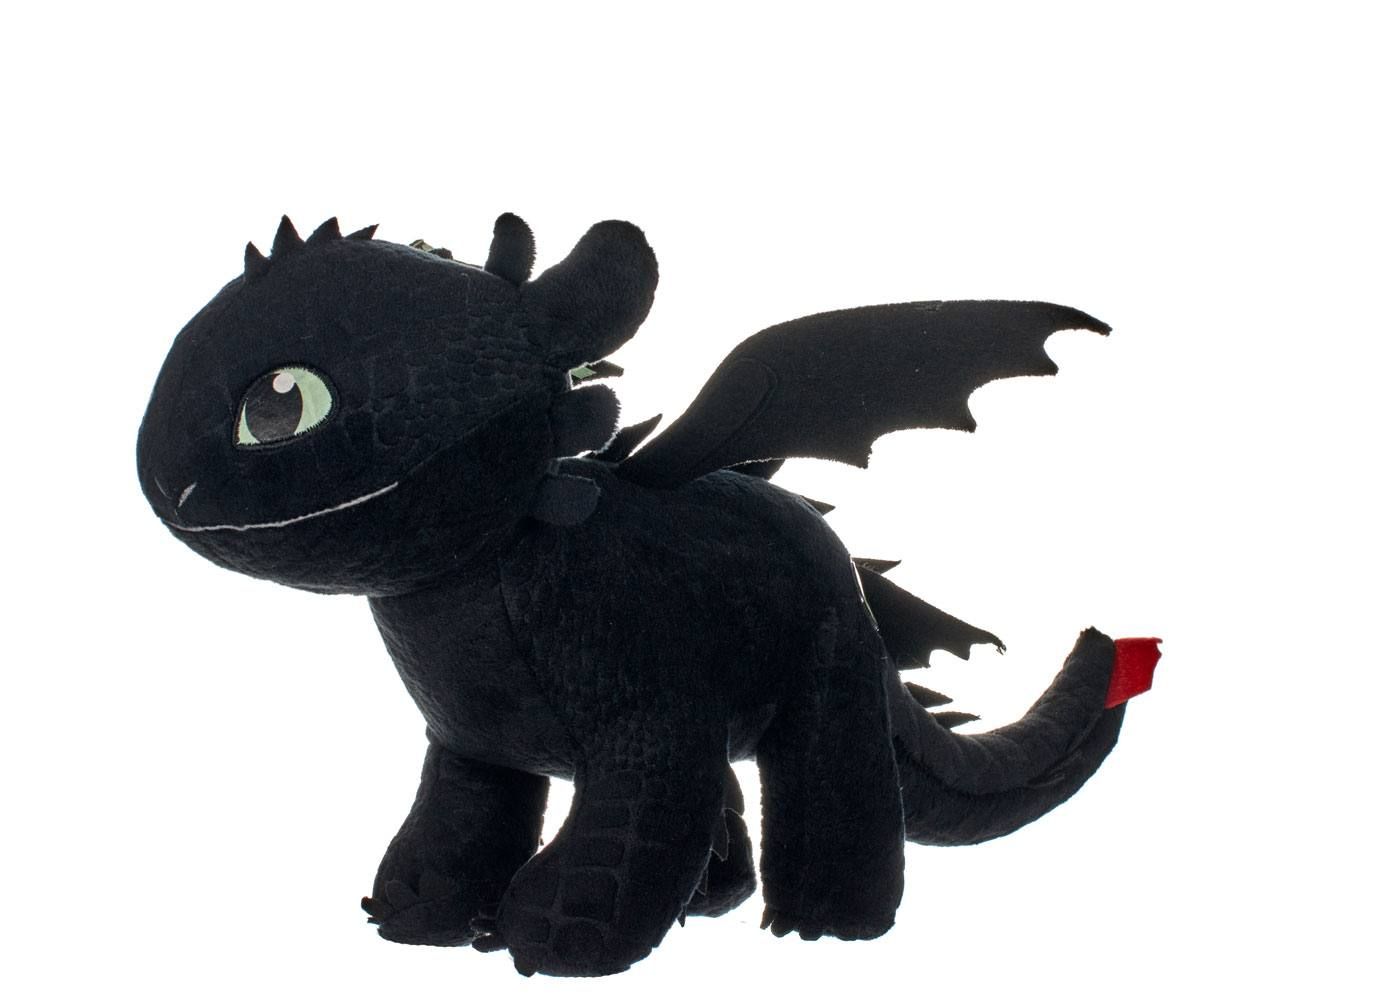 How to Train Your Dragon 3 Plyšák Figure Toothless Glow In The Dark 32 cm Joy Toy (IT)